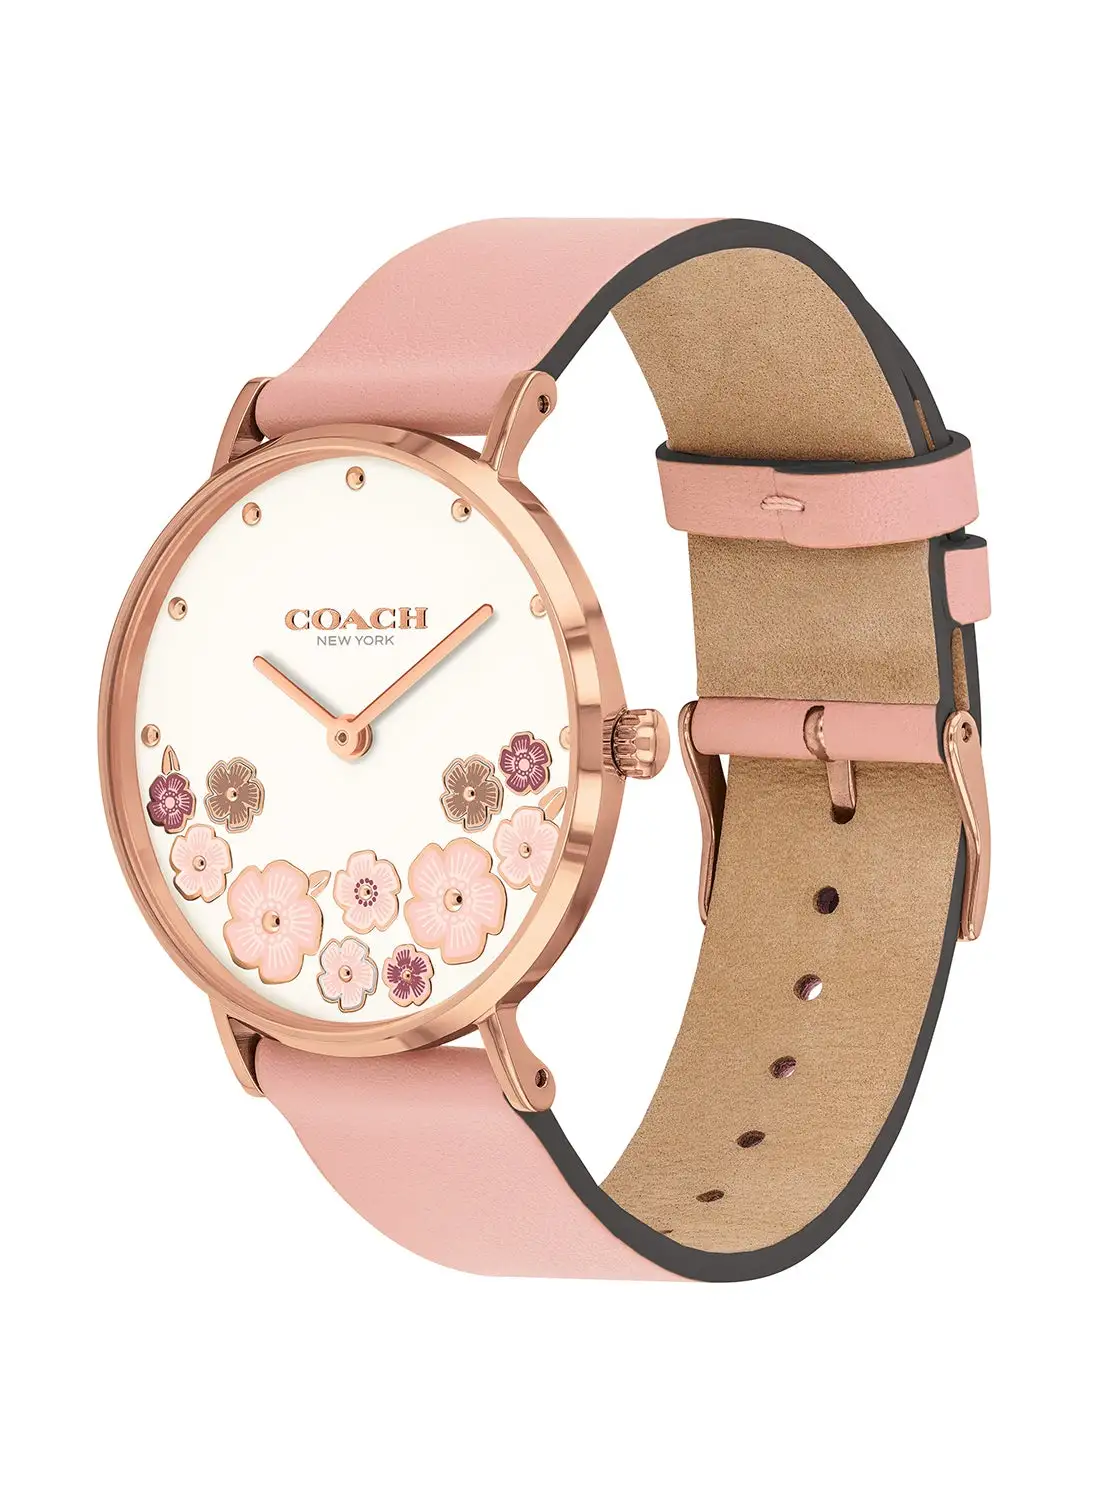 COACH Women's Analog Round Shape Leather Wrist Watch 14503770 - 36 Mm